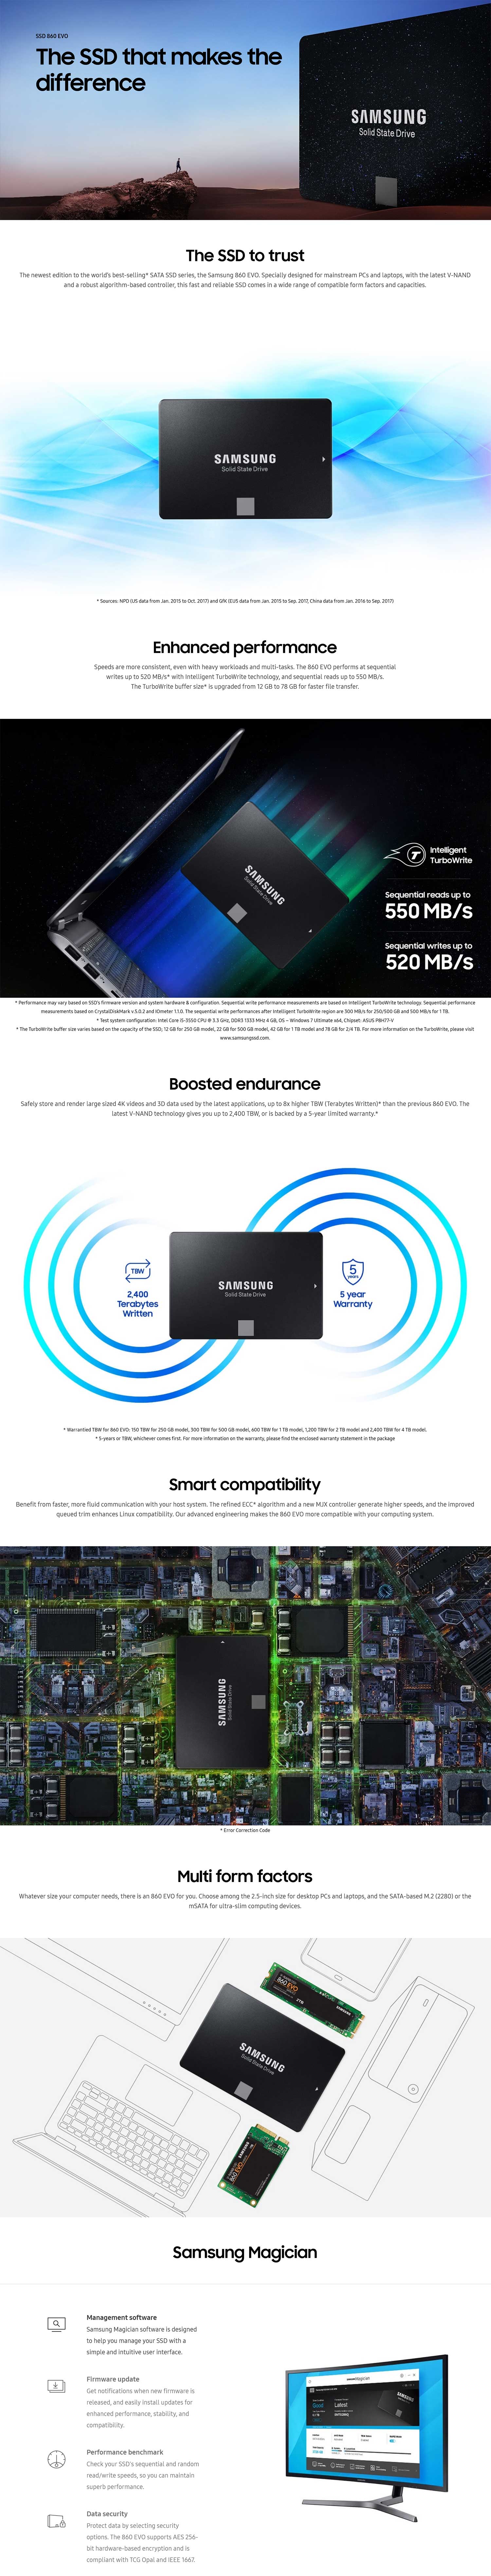 Samsung 860 Evo 2TB 2.5in SATA III 6GB/s V-NAND SSD MZ-76E2T0BW Details